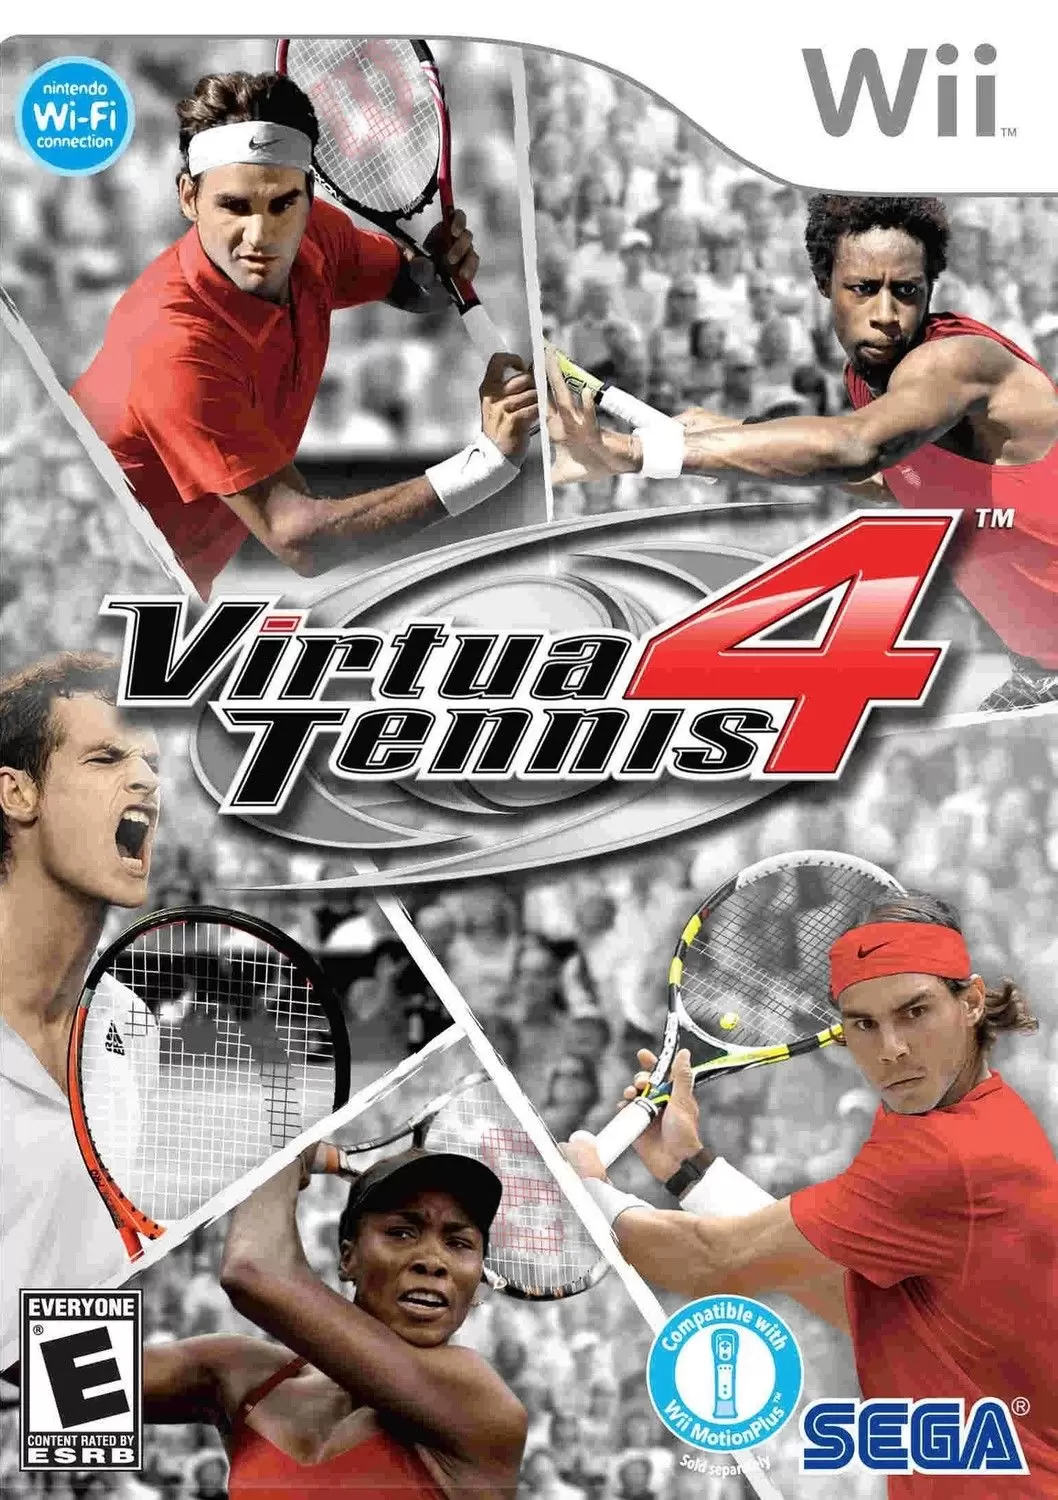 Nintendo Wii Games - Virtua Tennis 4